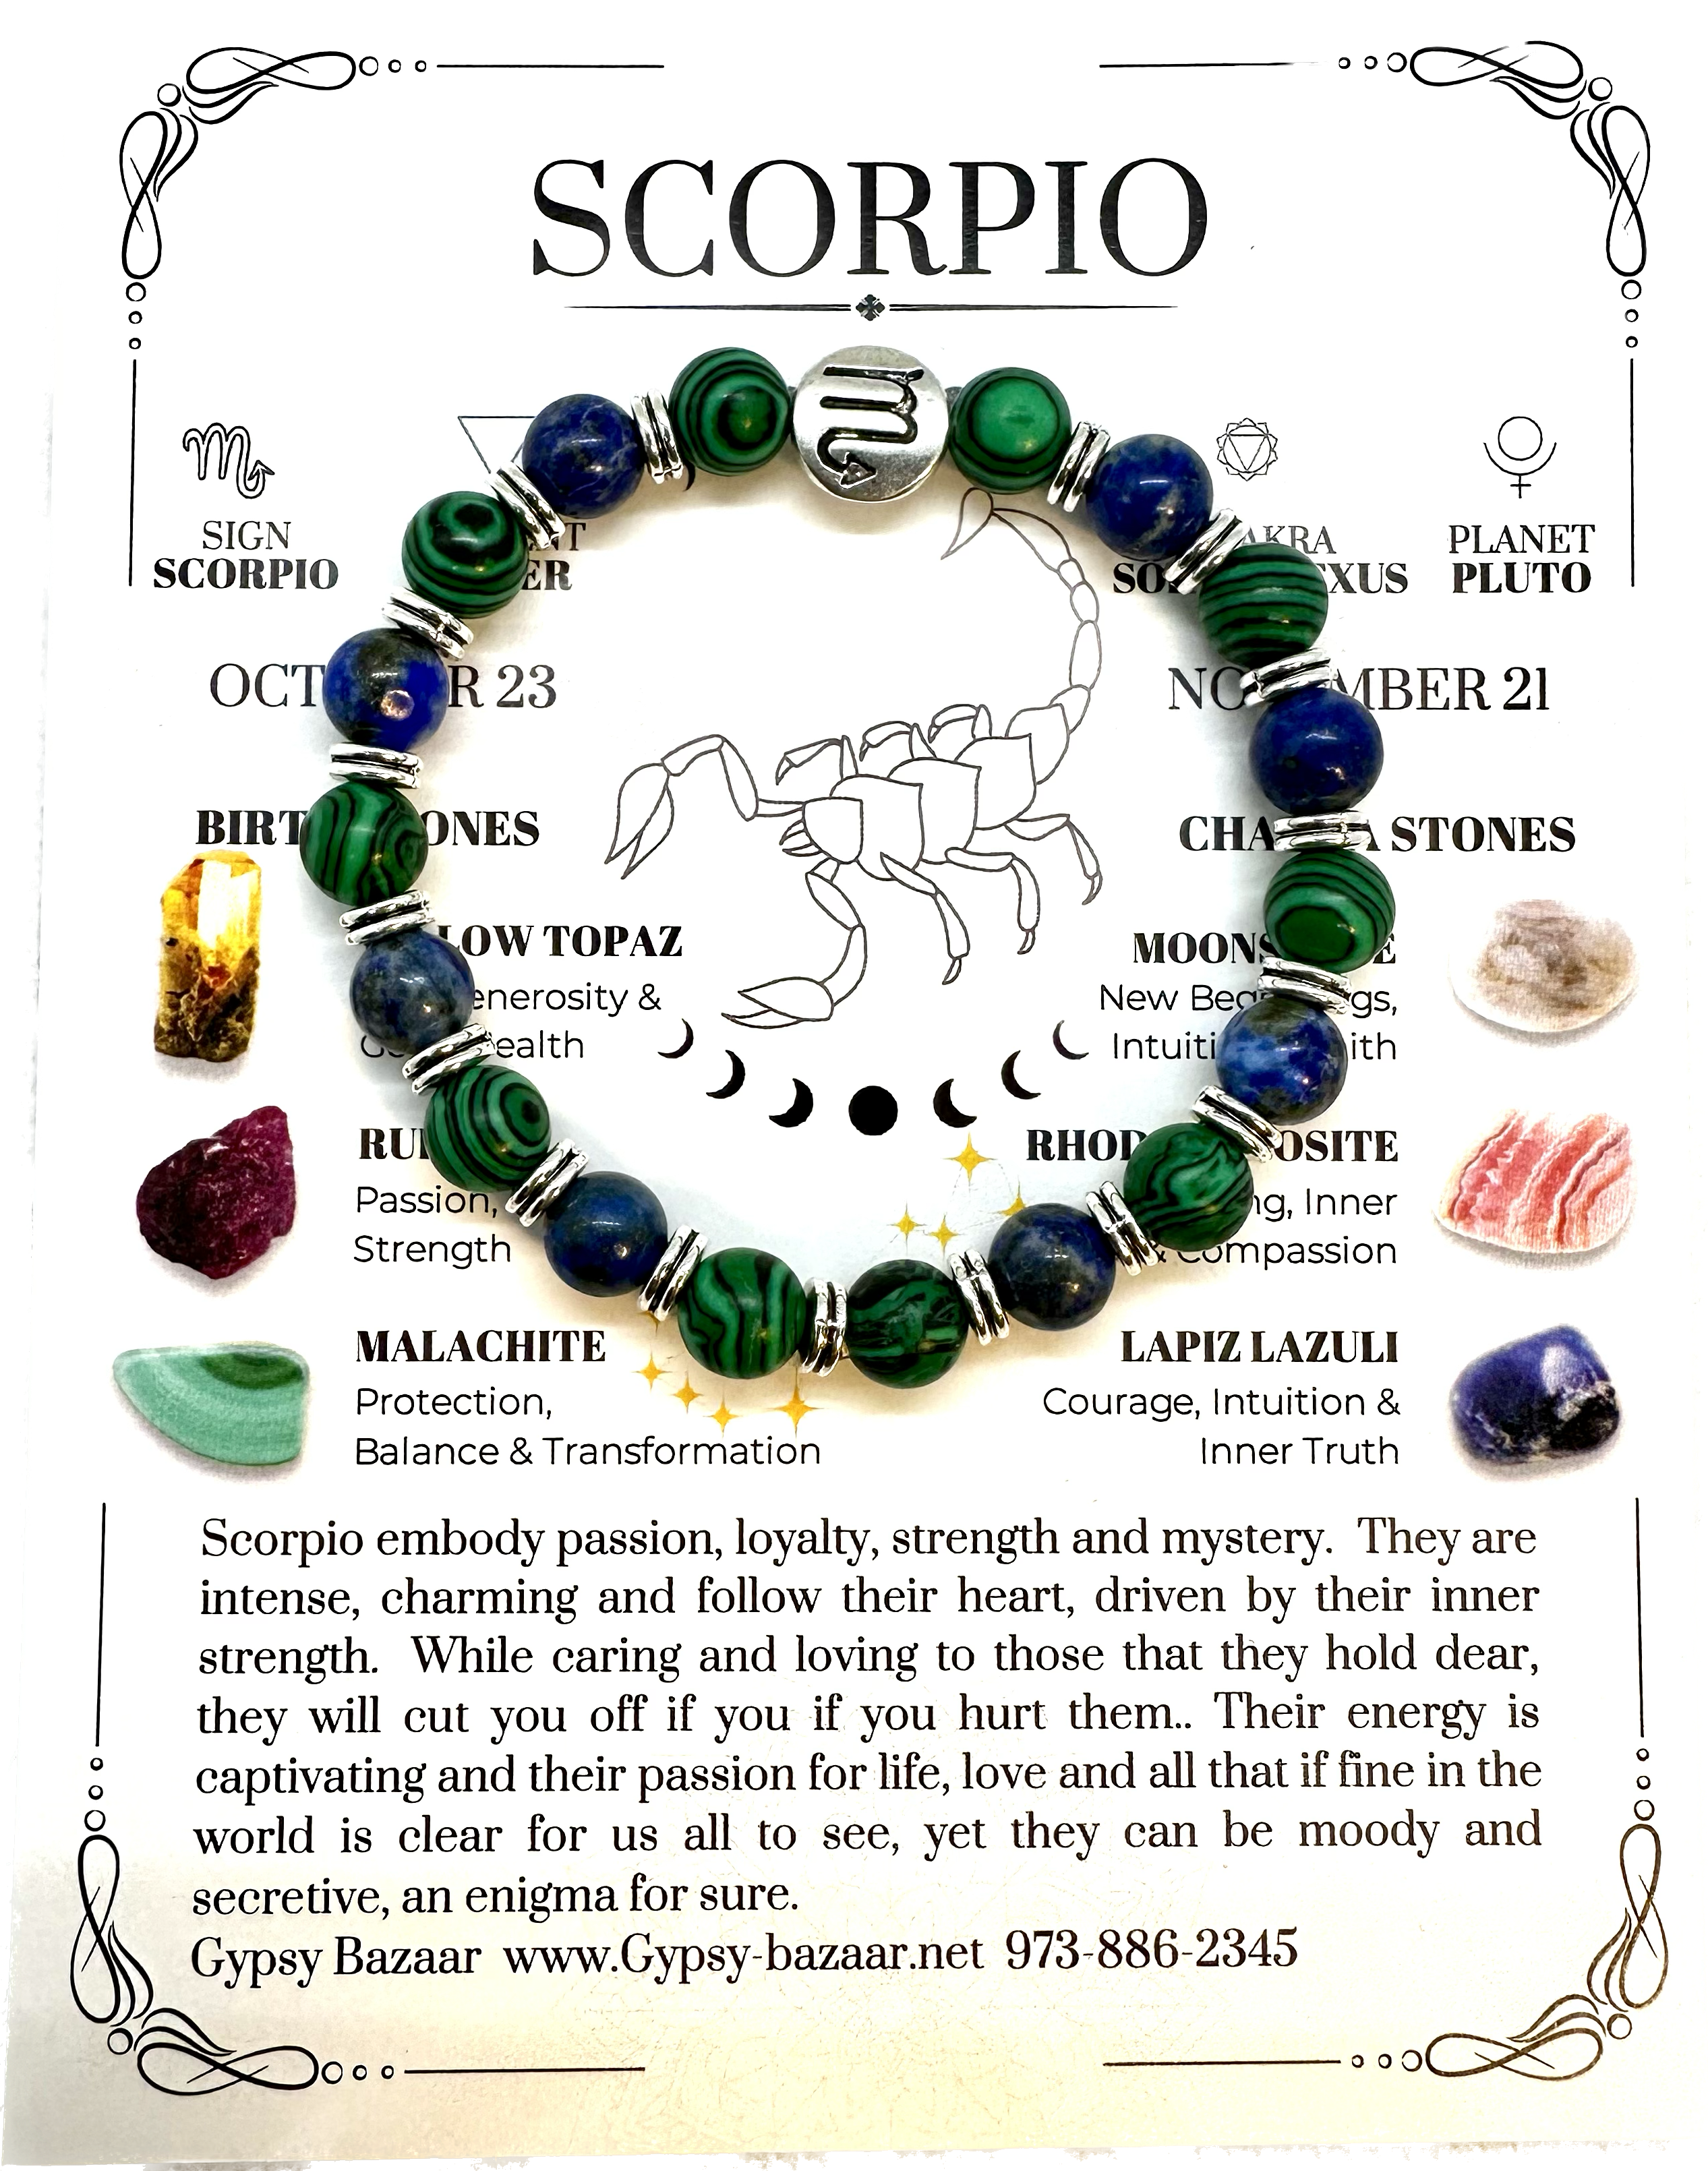 Amazon.com: Zodiac Bracelet for Men Women 10mm Natural Black Onyx Stone  Star Sign Constellation Horoscope Bracelet Gifts (Scorpio) : Handmade  Products